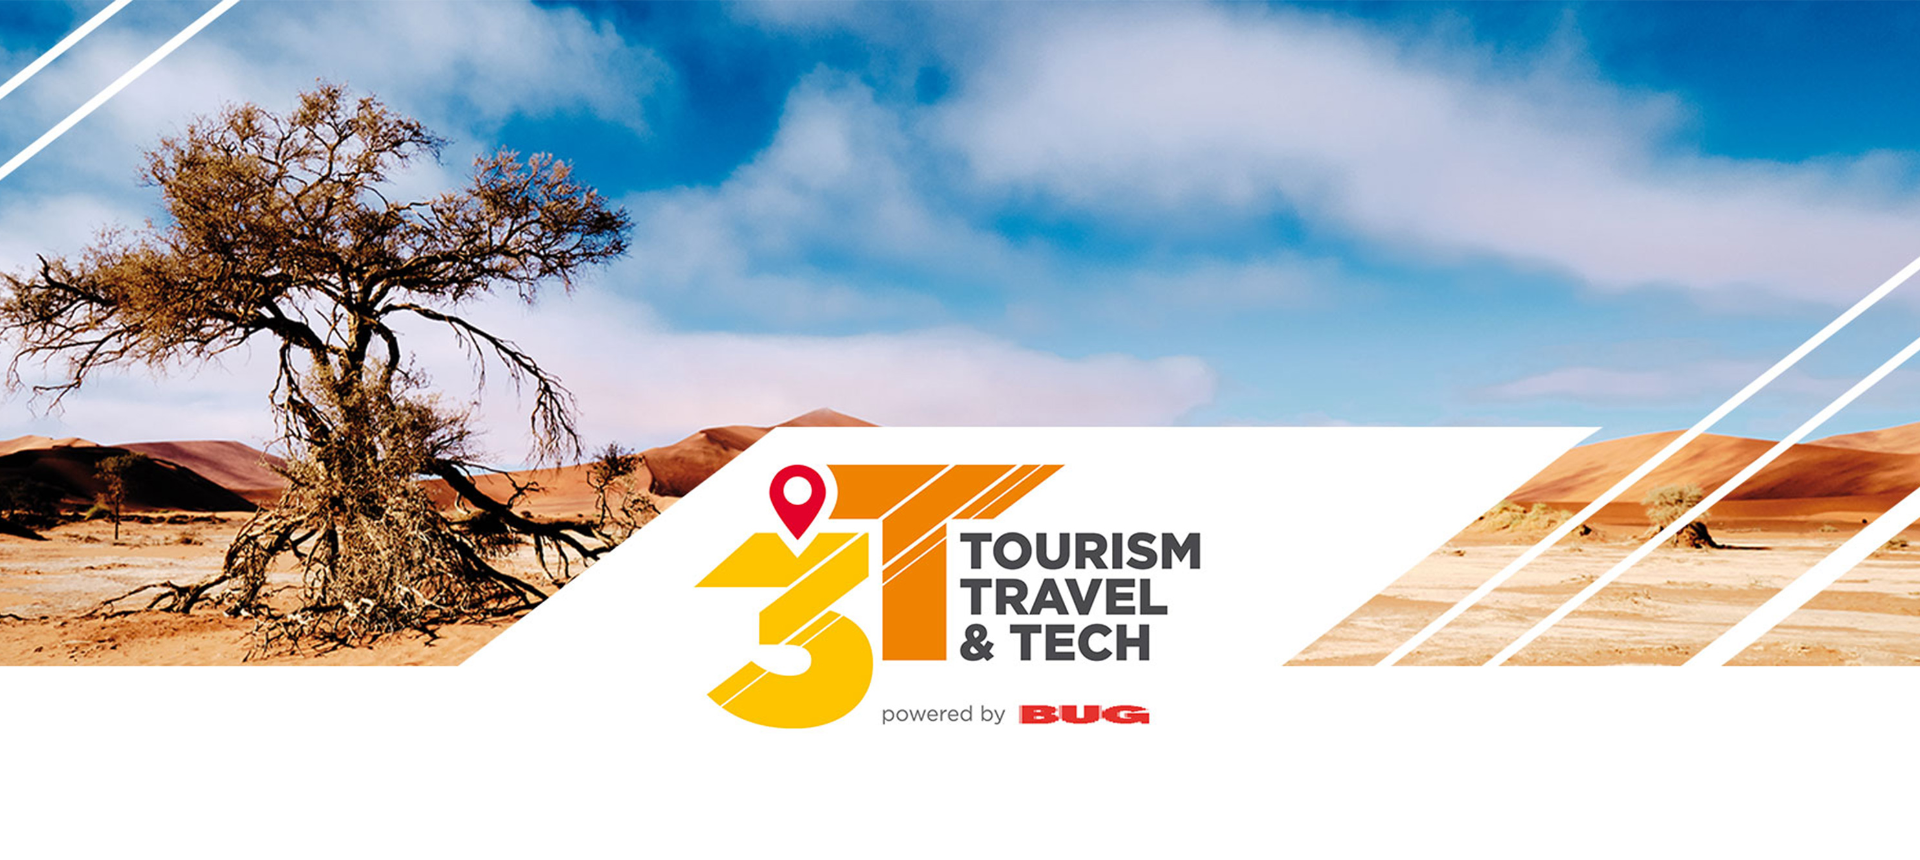 3T - Tourism, Travel & Tech [2021]